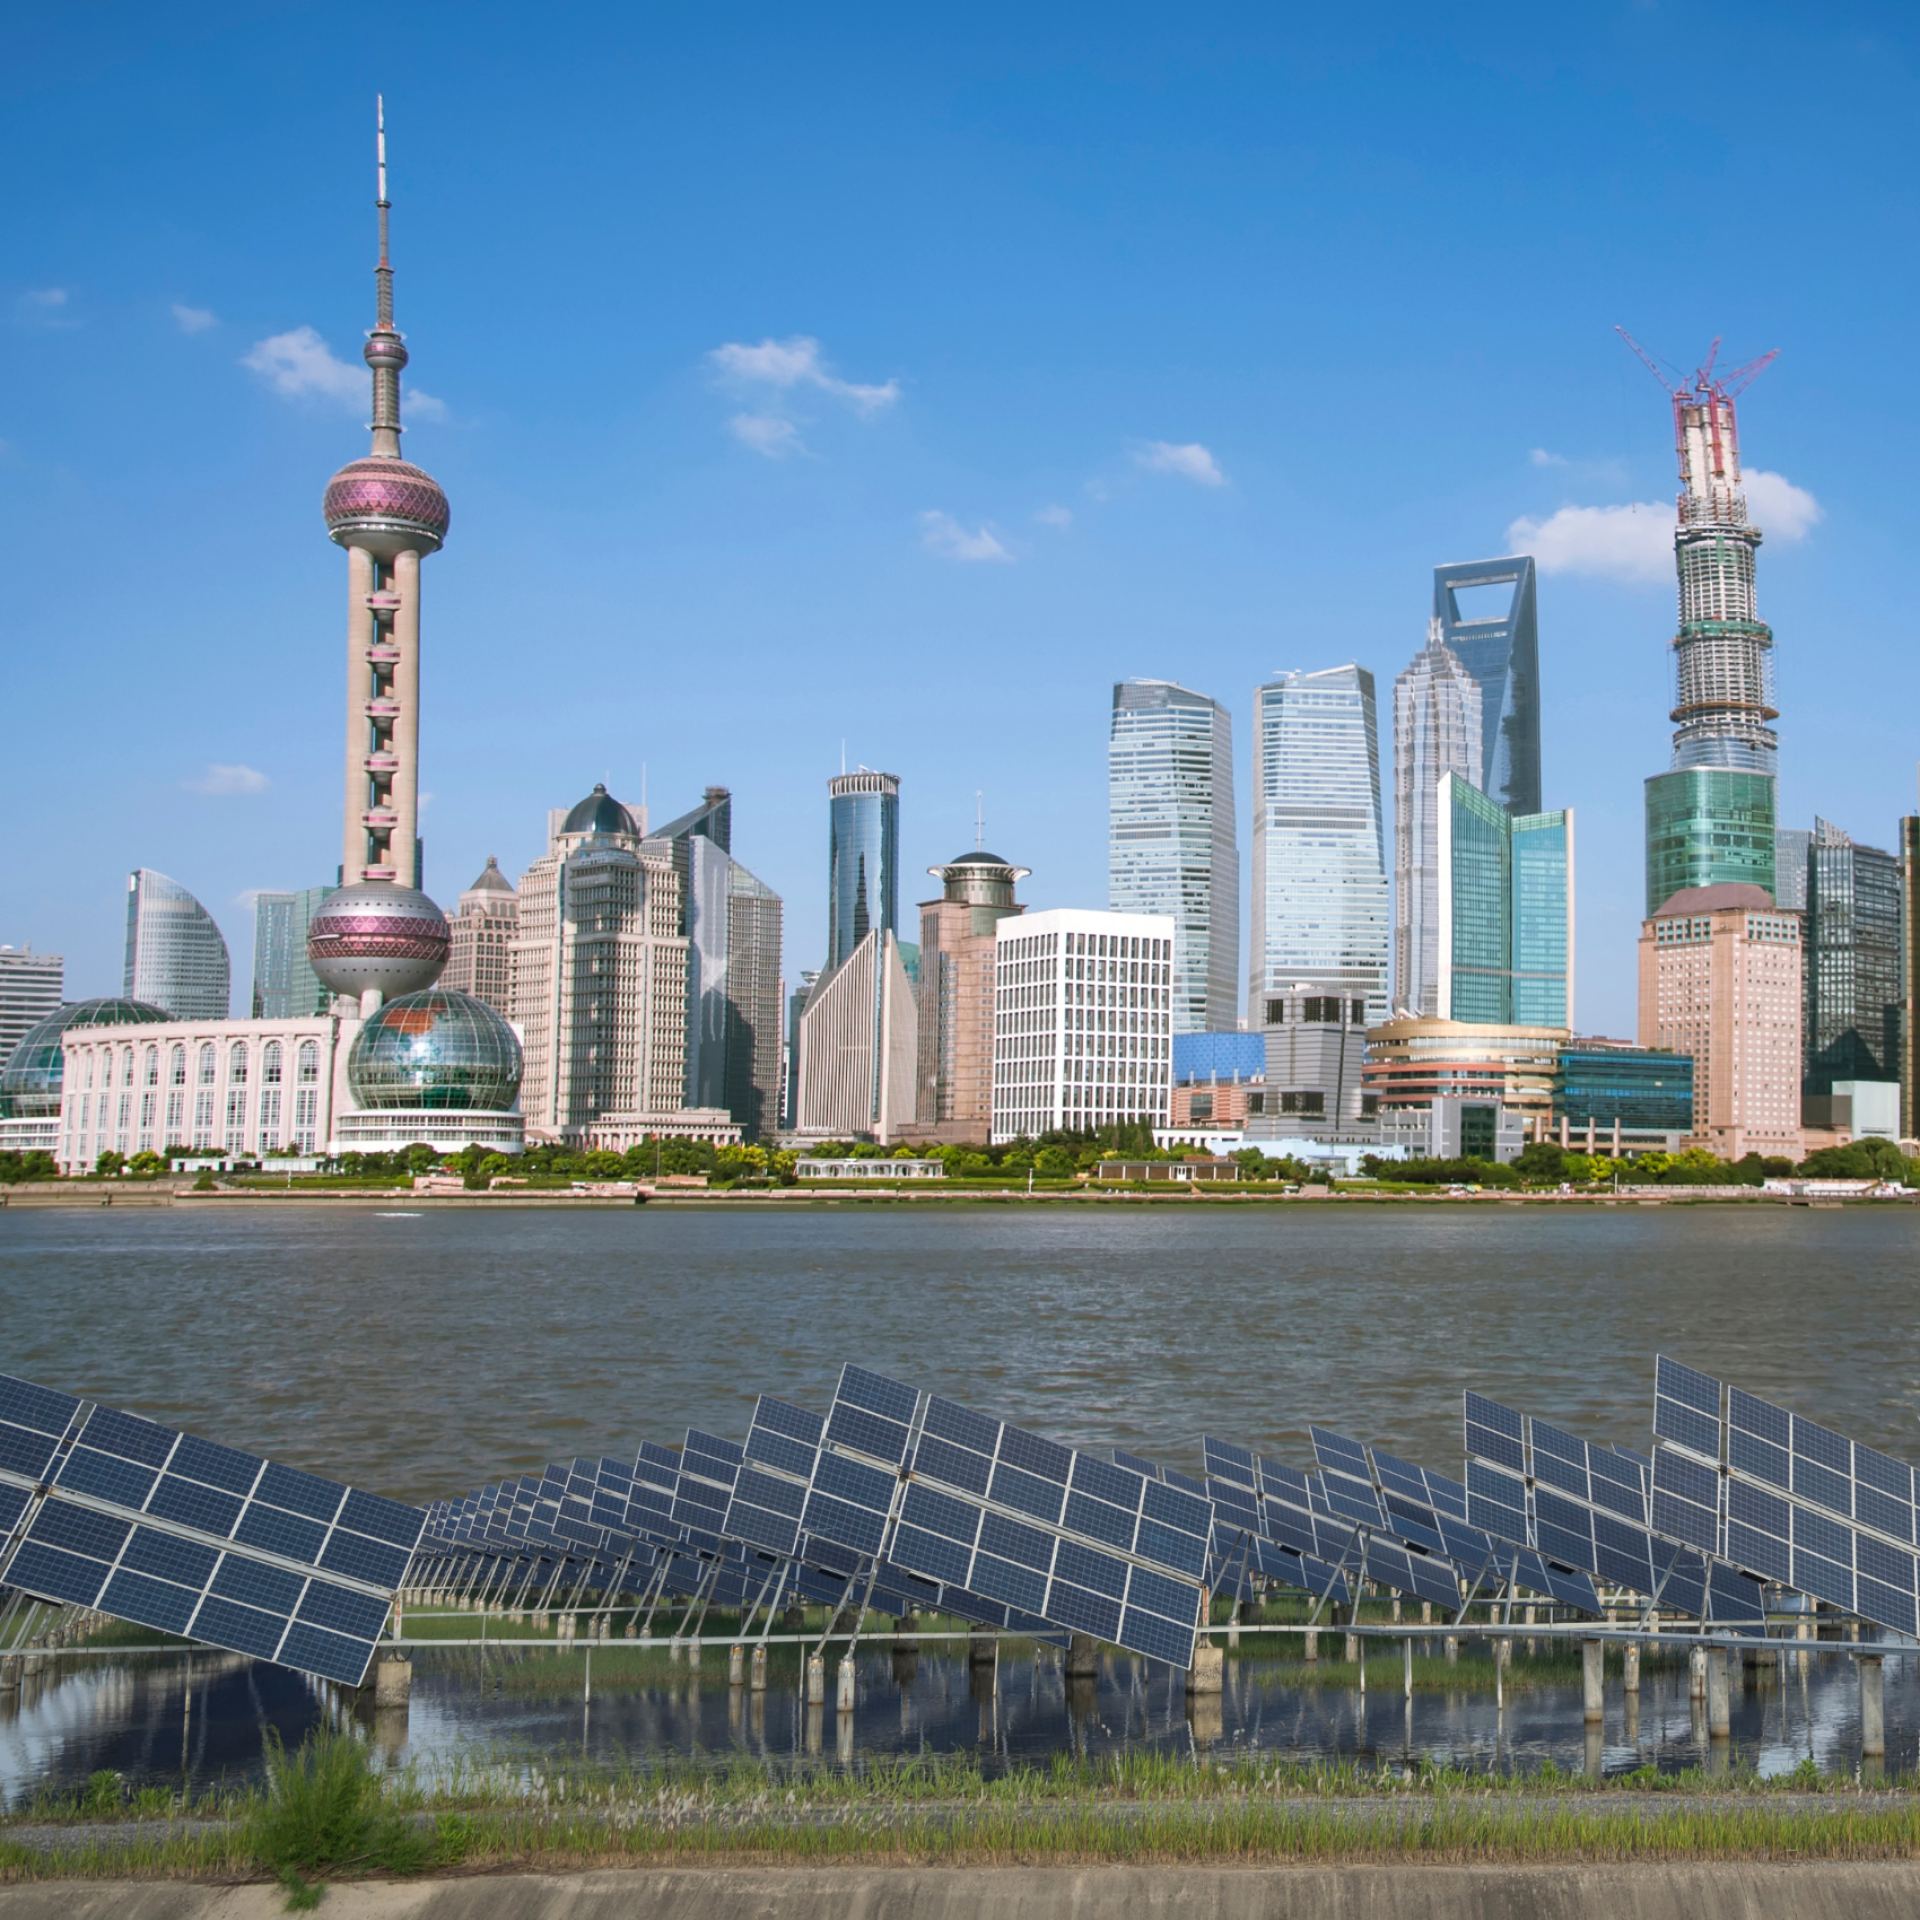 Solar power can help solve china’s coal power dilemma